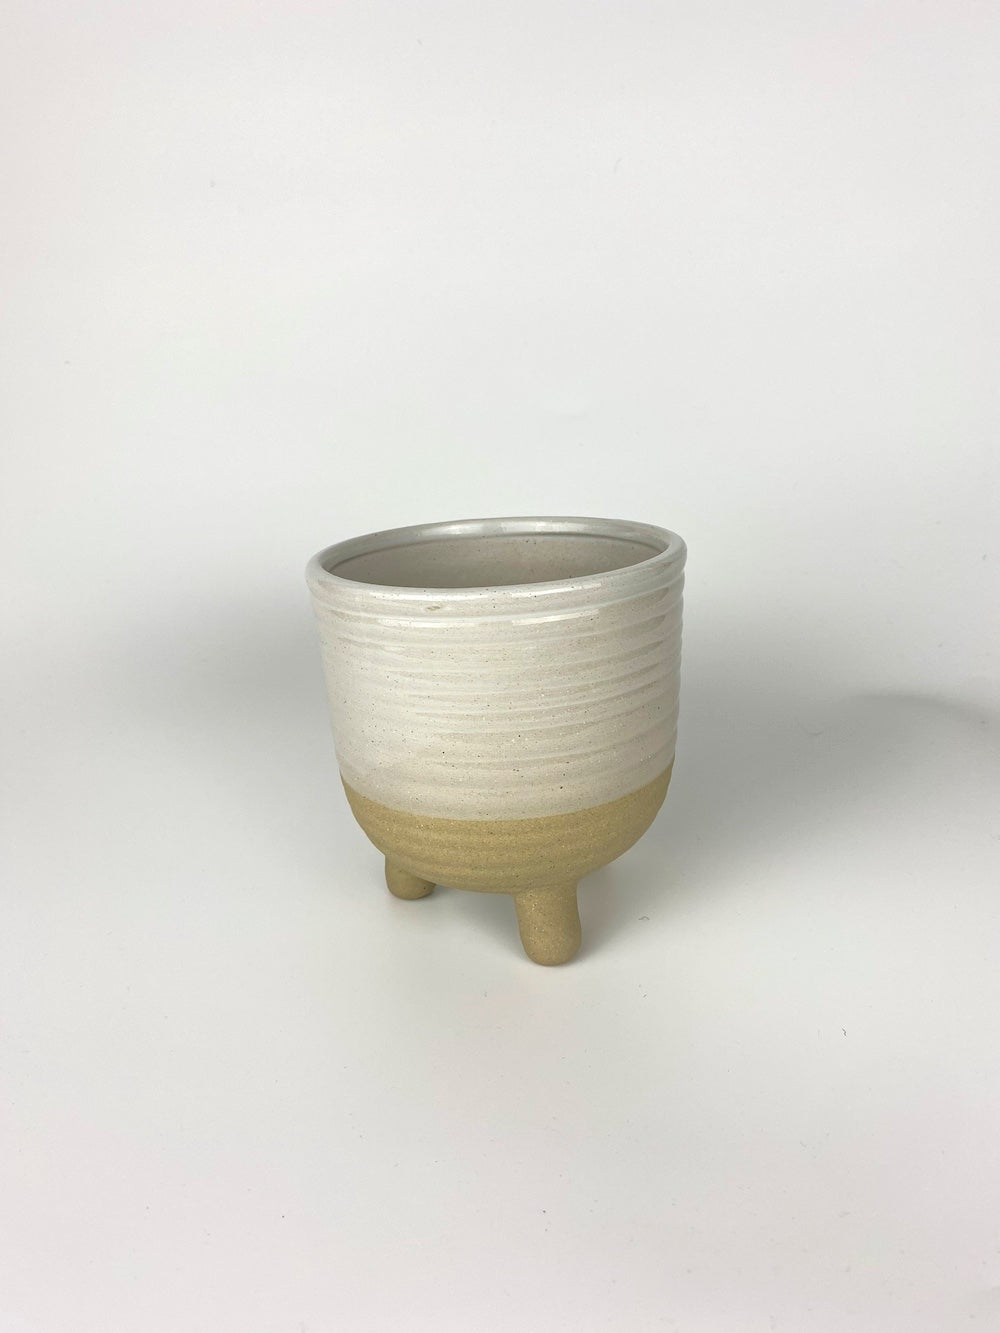 Cream ceramic plant pot on a white background